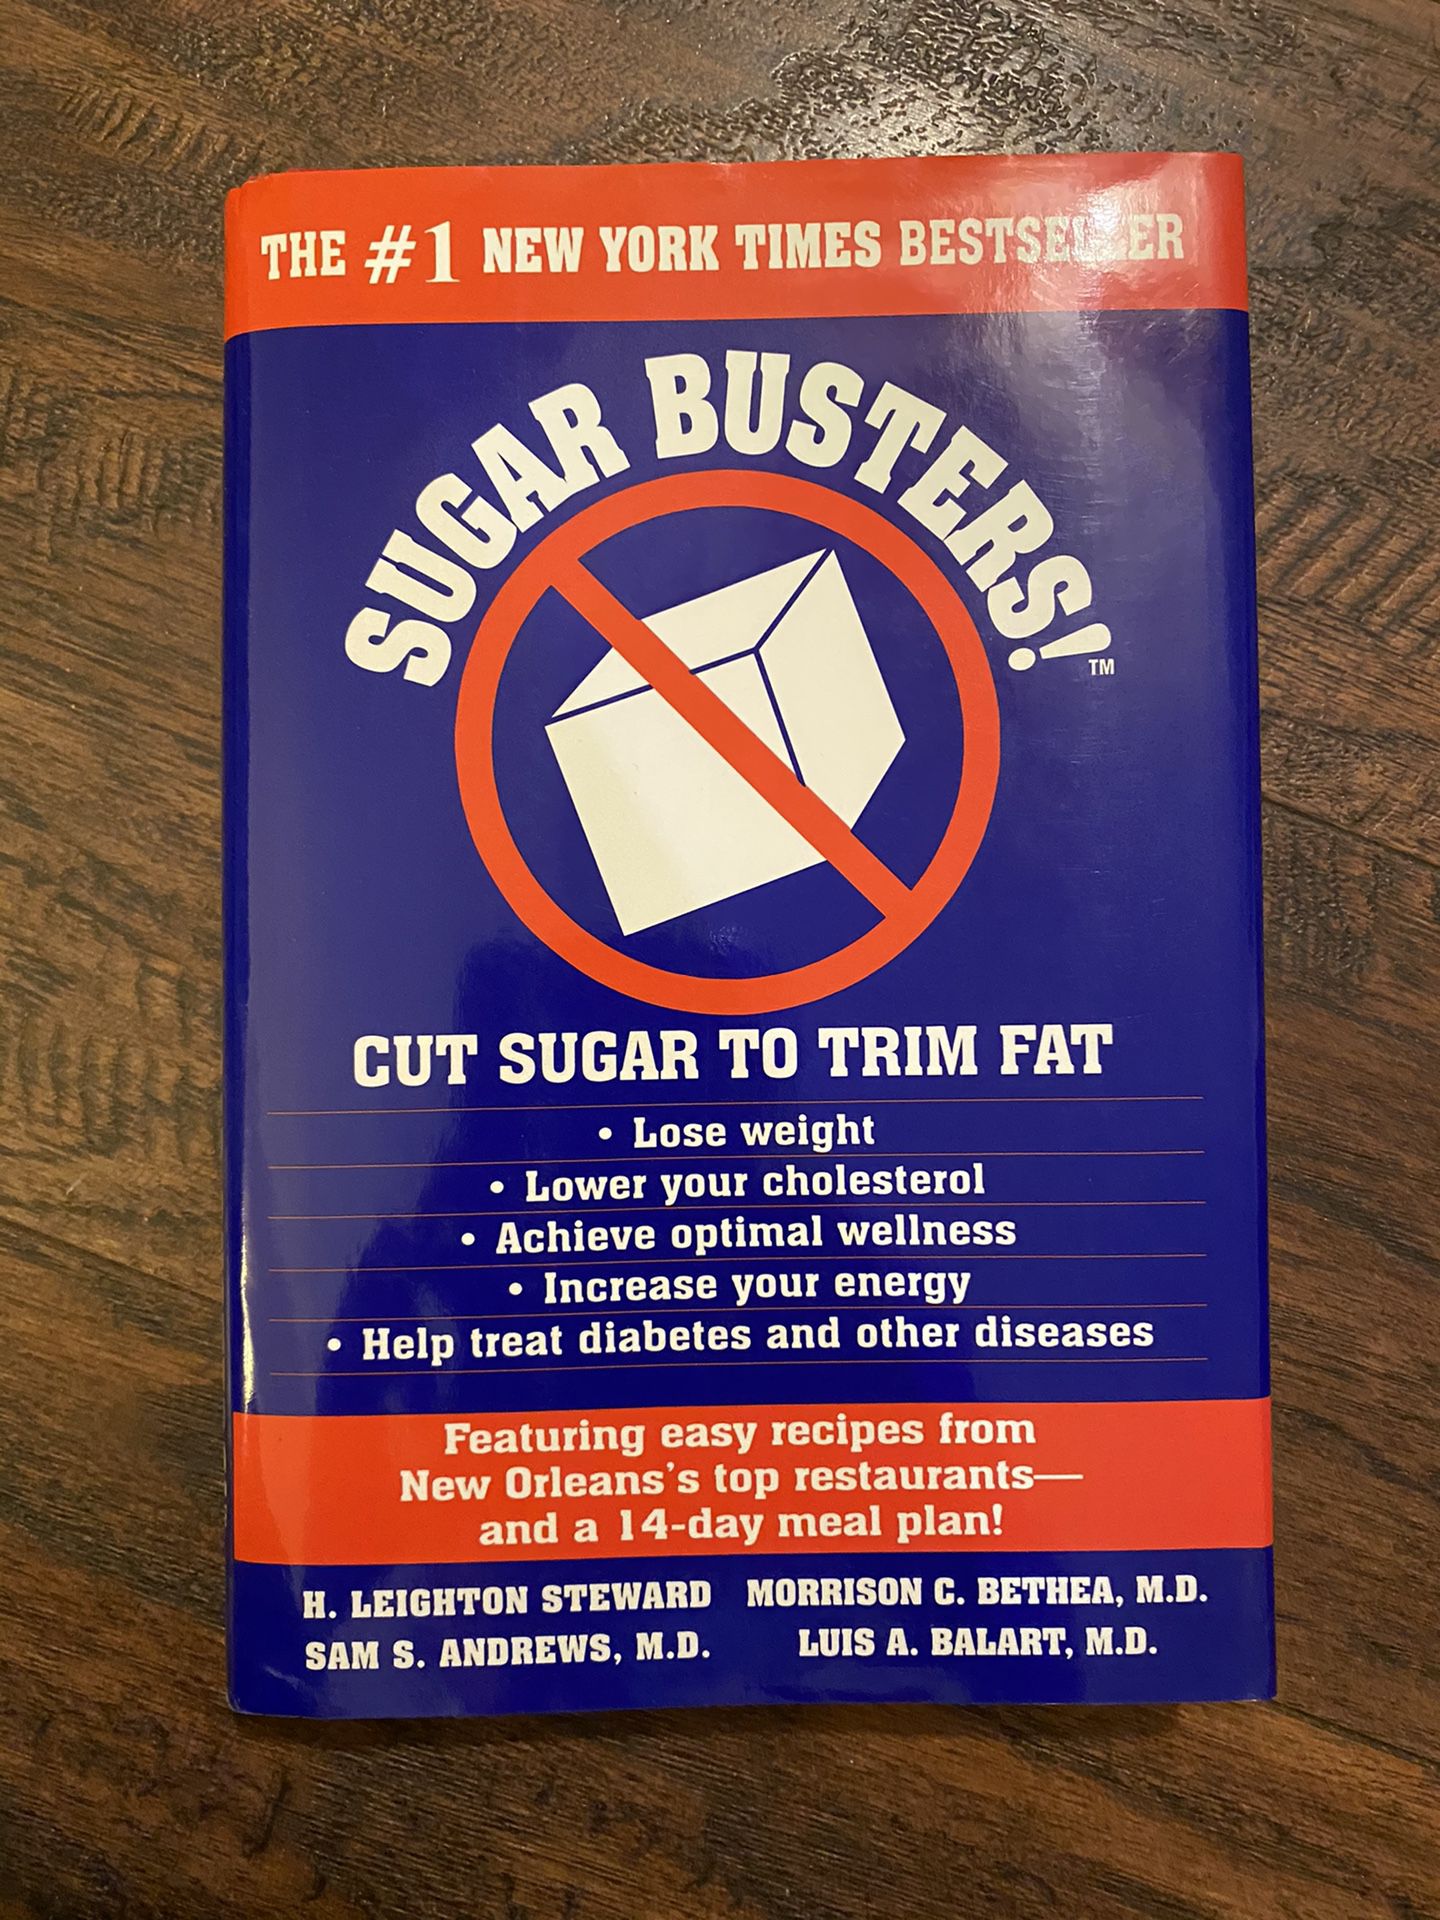 Sugar busters